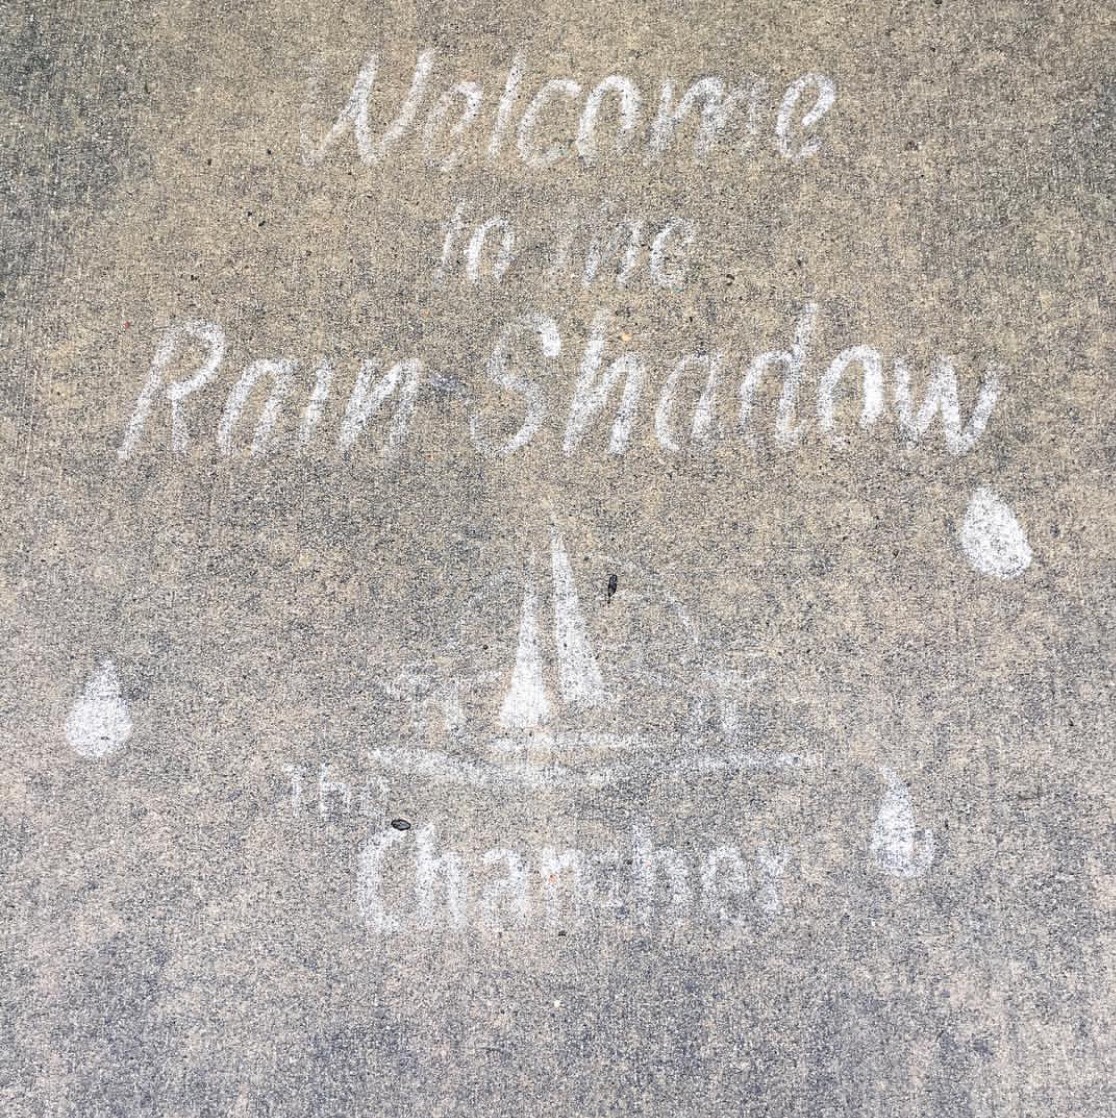 Rainy Days on Whidbey, Street art, Rainy Days, whidbey Island, Oak Harbor